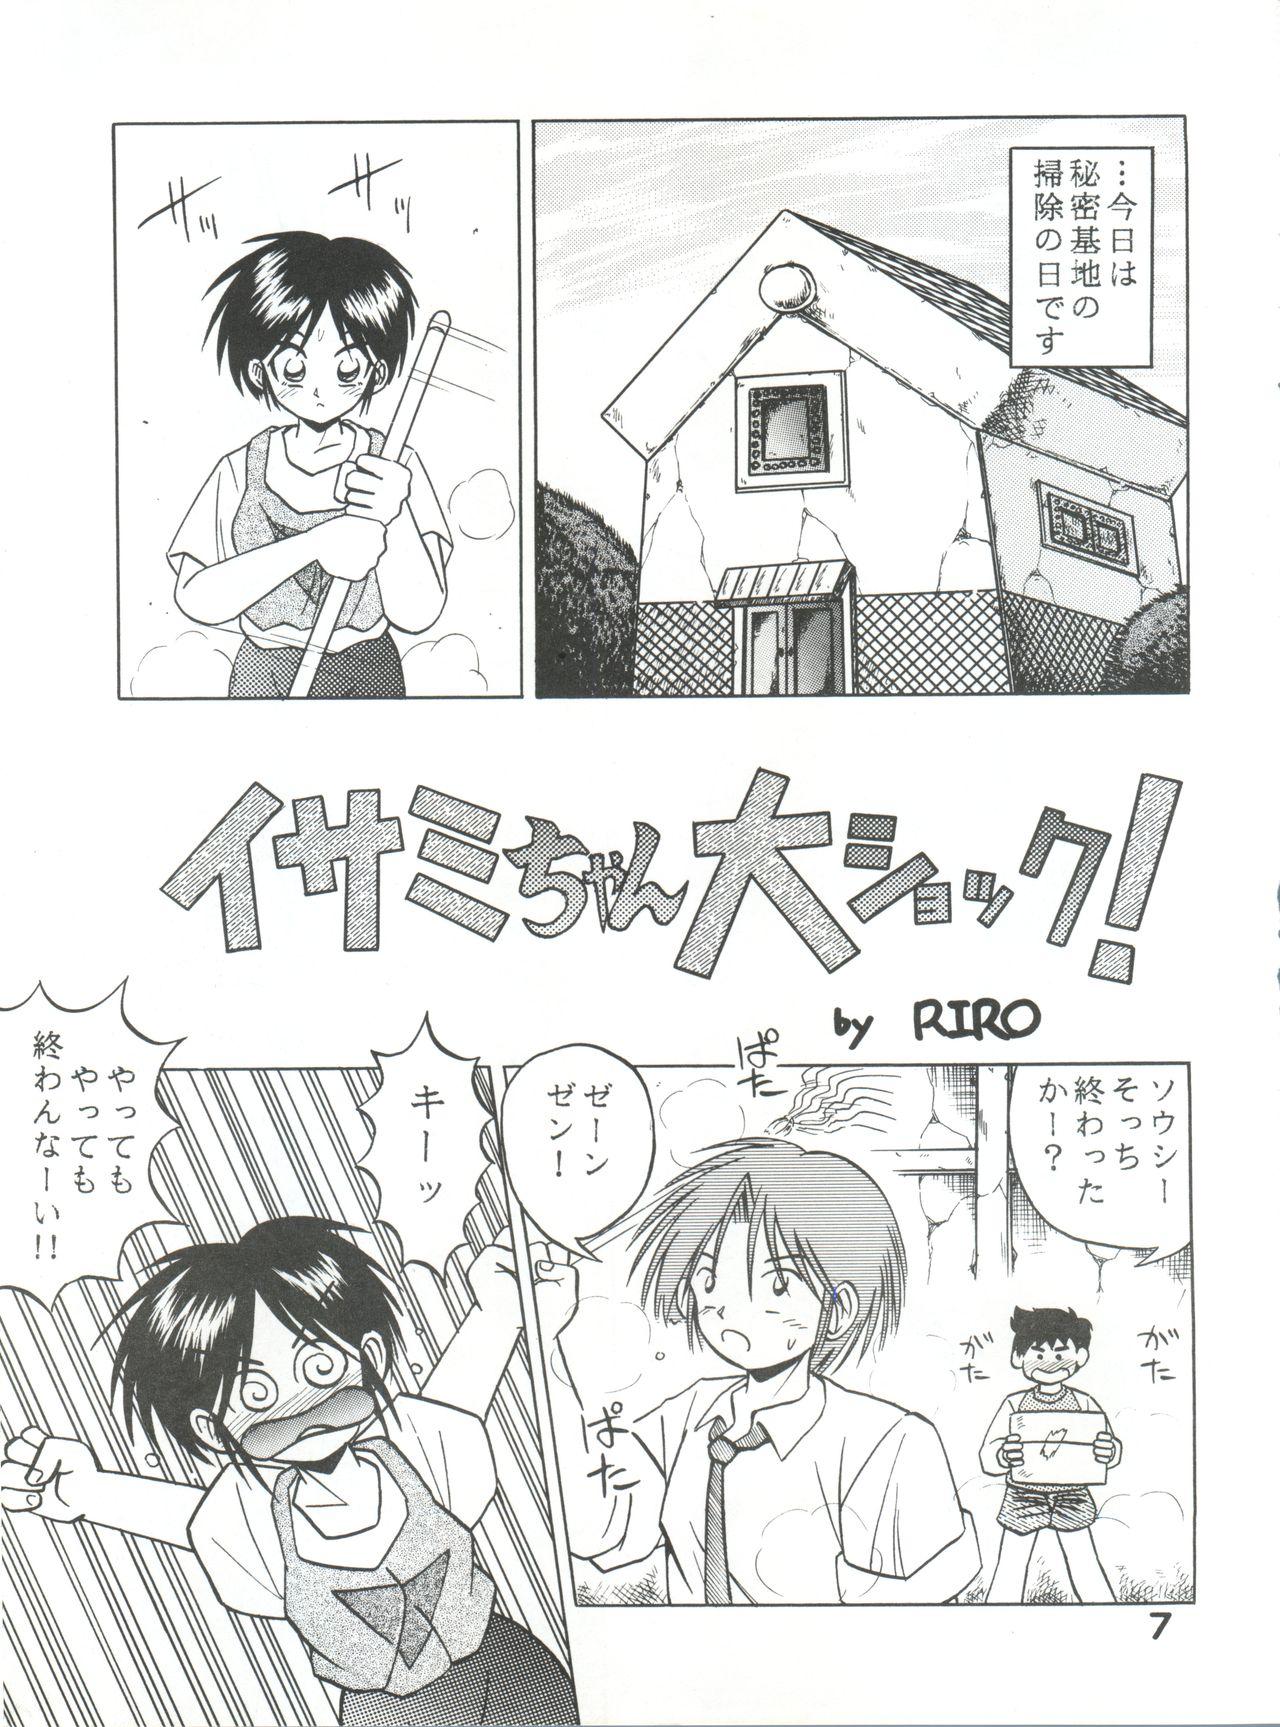 Hidden Camera Gonen Sankumi Shinsengumi! - Tobe isami Maledom - Page 6